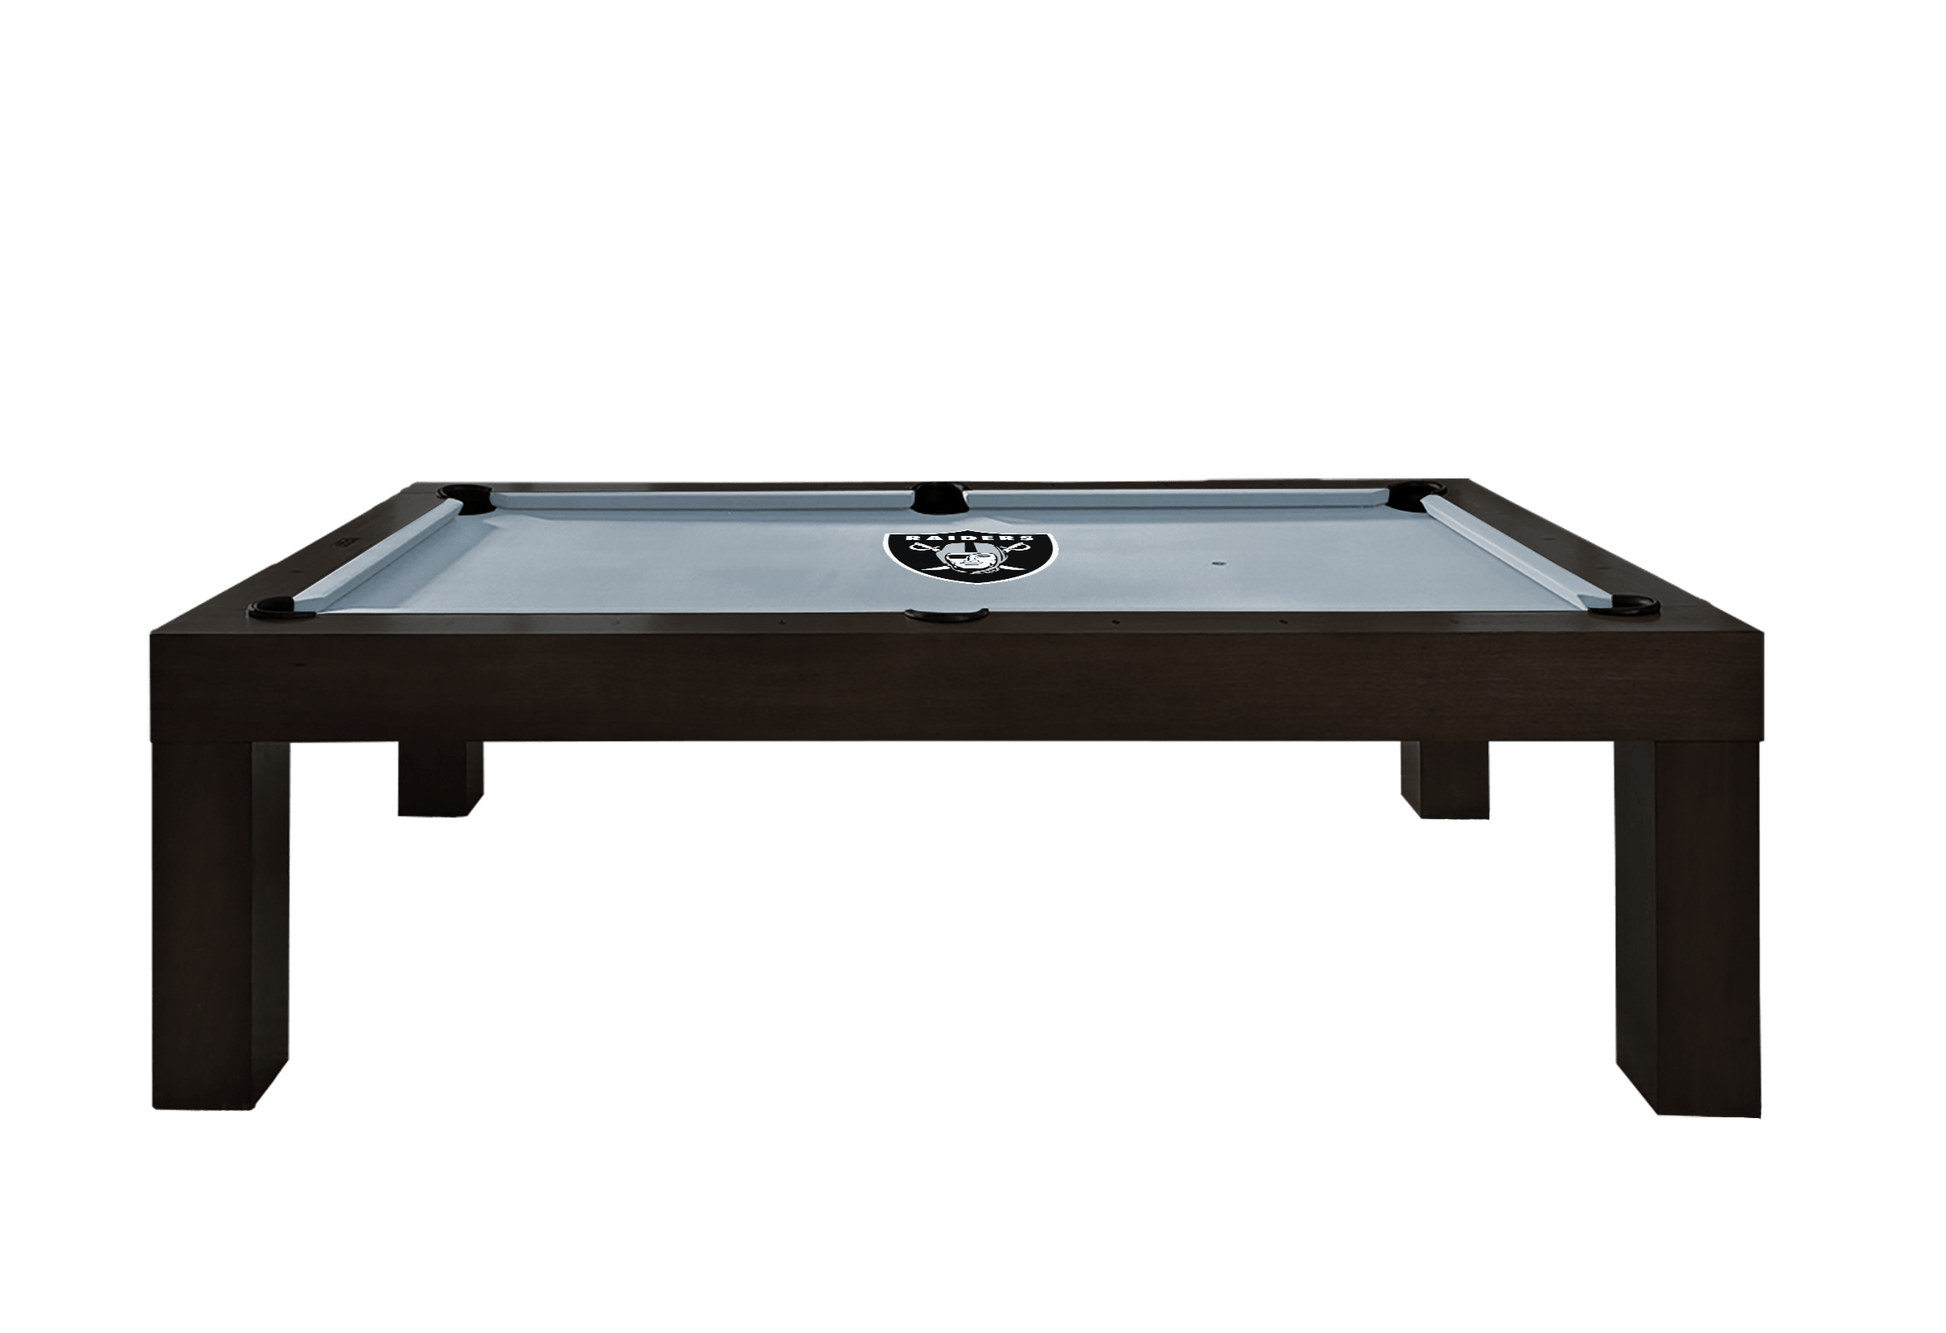 Las Vegas Raiders Premium Pool Table Bundle - Black Ash Pool Bundle Home Arcade Games   